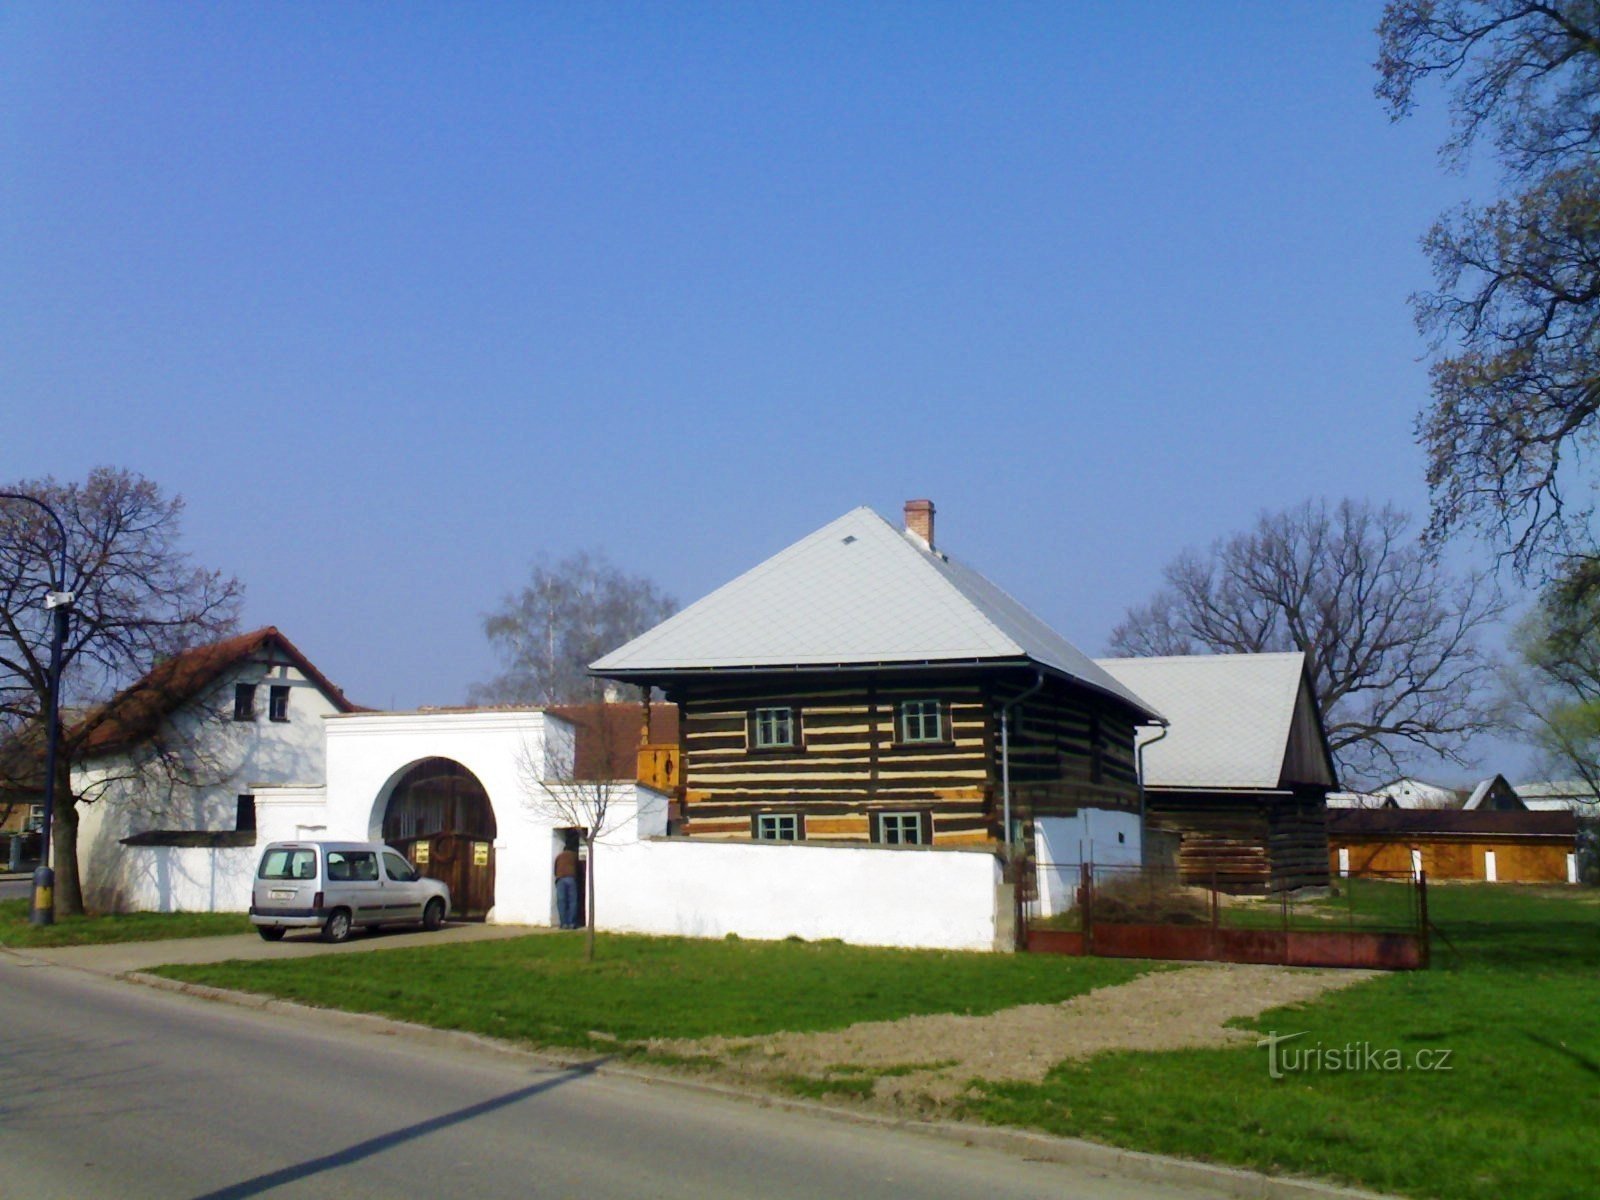 Šrámek's estate